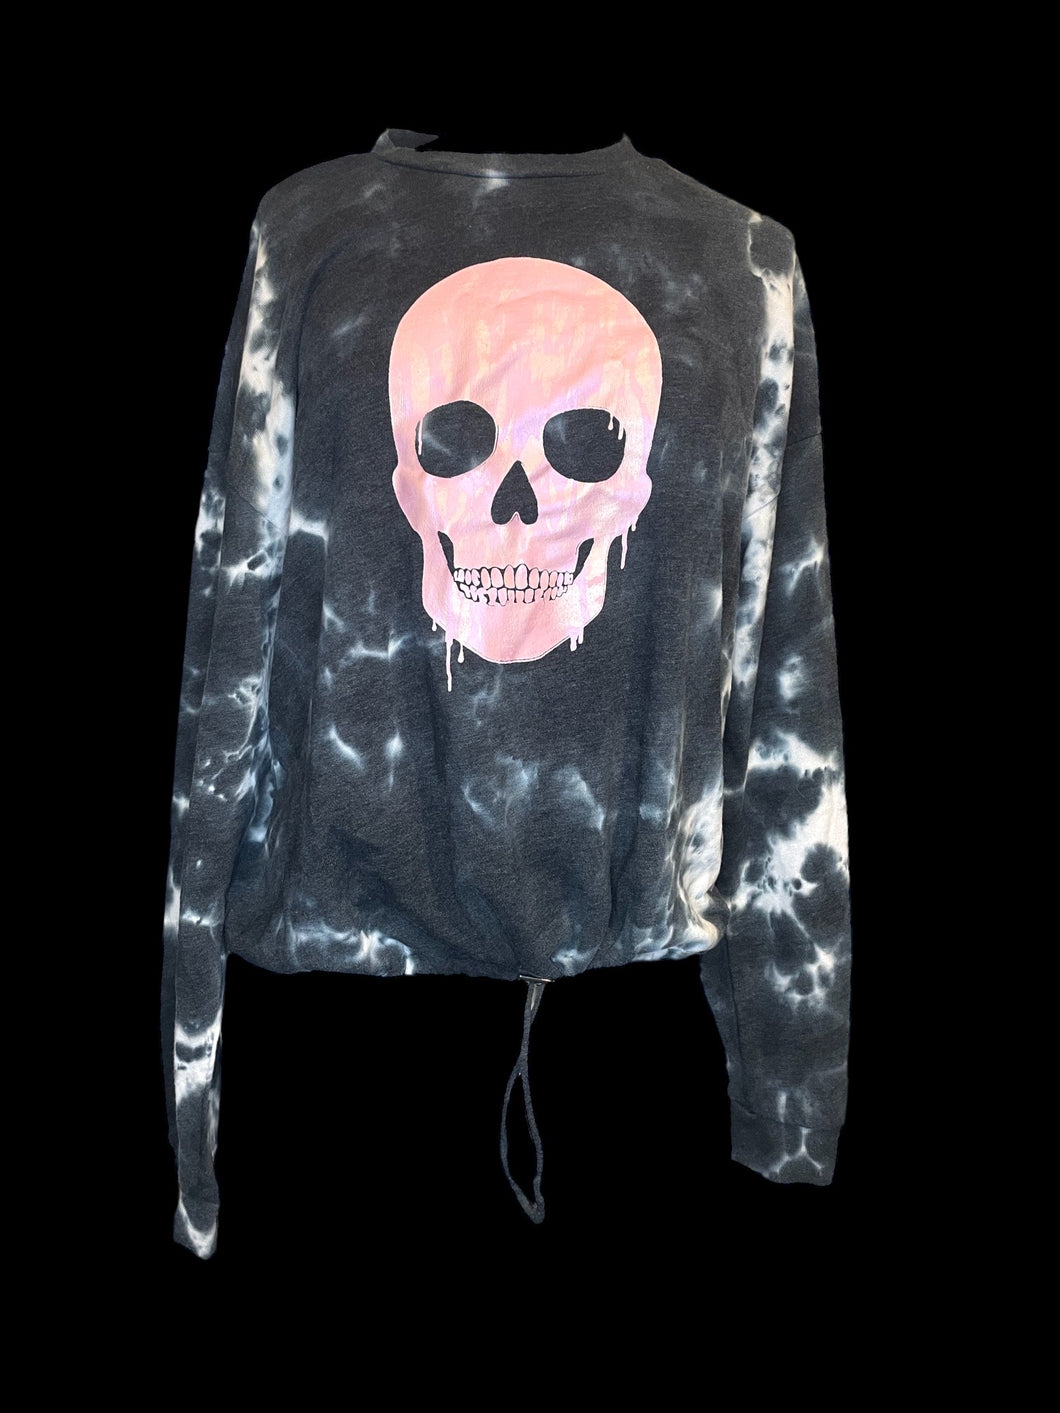 1X Black & white acid wash cropped sweater w/ pink skull graphic, & drawstring waist